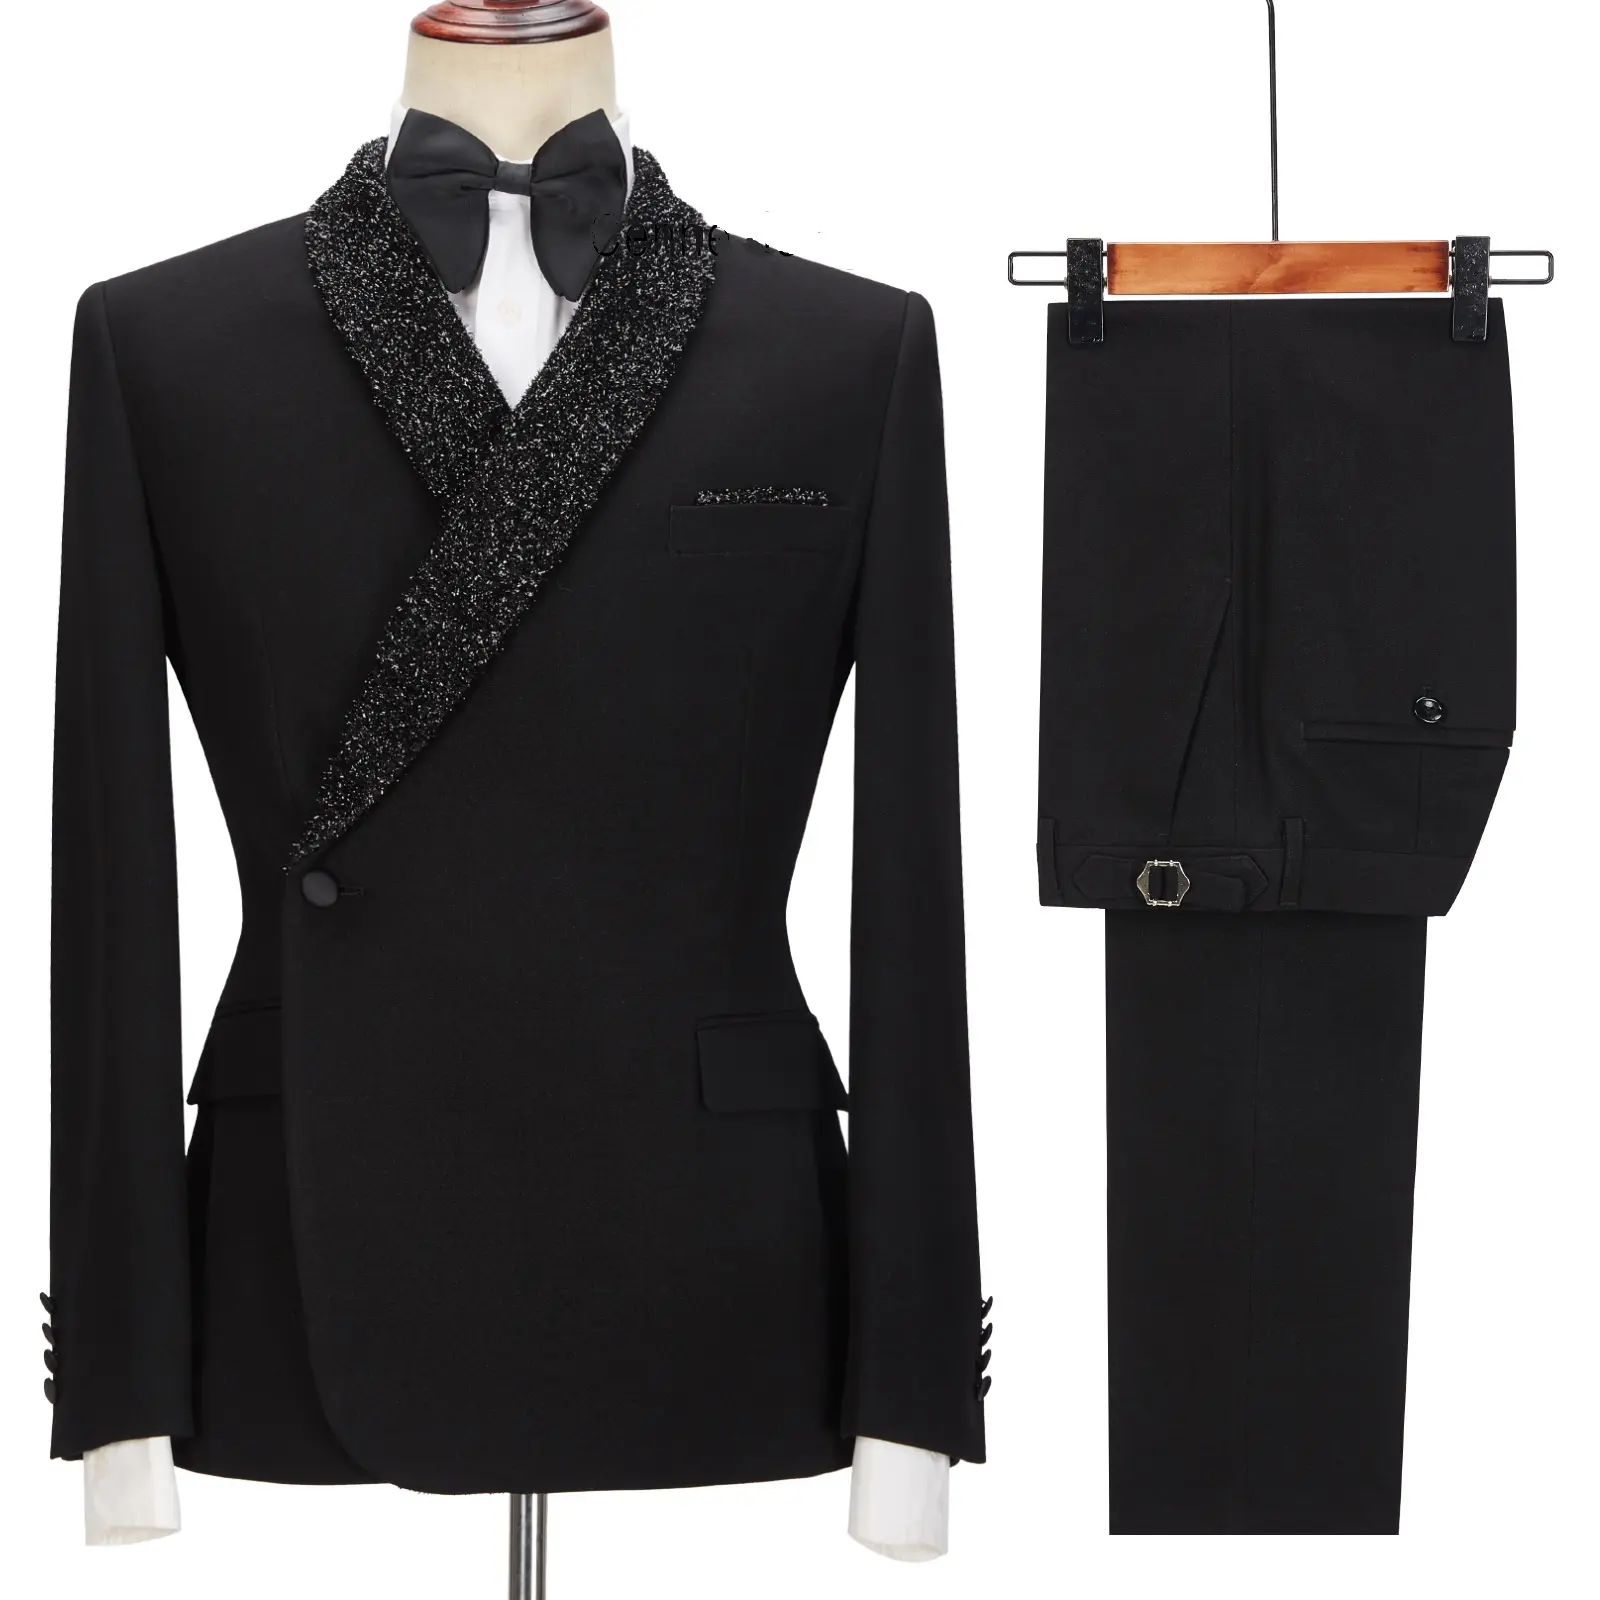 HD202 Latest Coat Design Men Suits Tailor-Made Tuxedo 2 Pieces Blazers Wedding Party Singer Groom Costume Homme Black